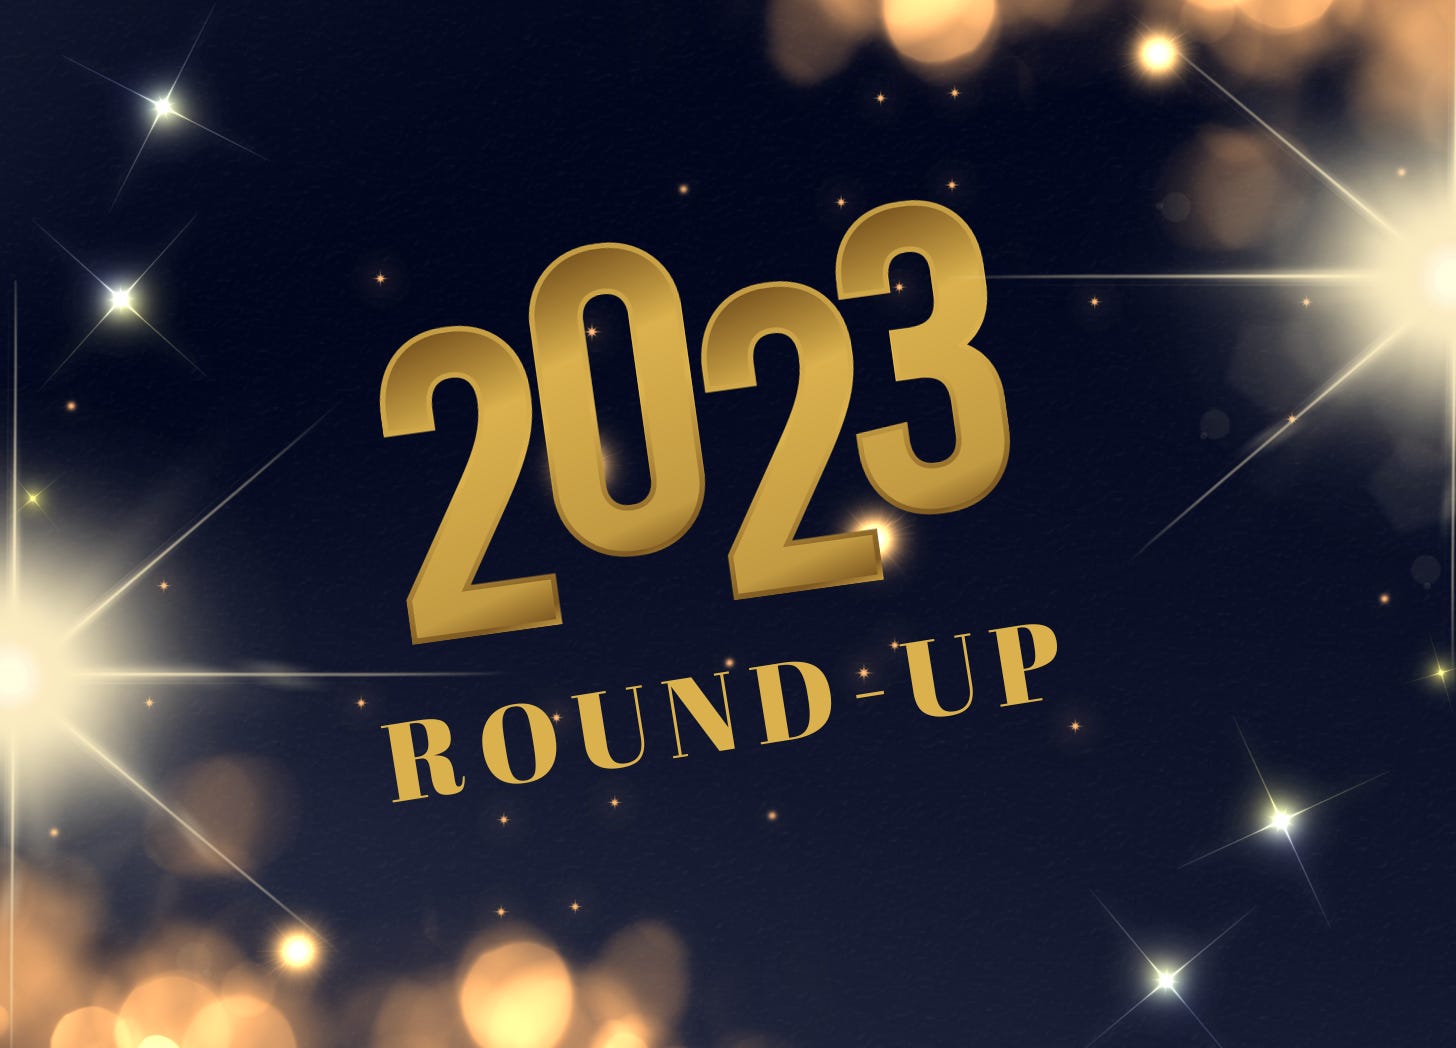 2023 Round-Up